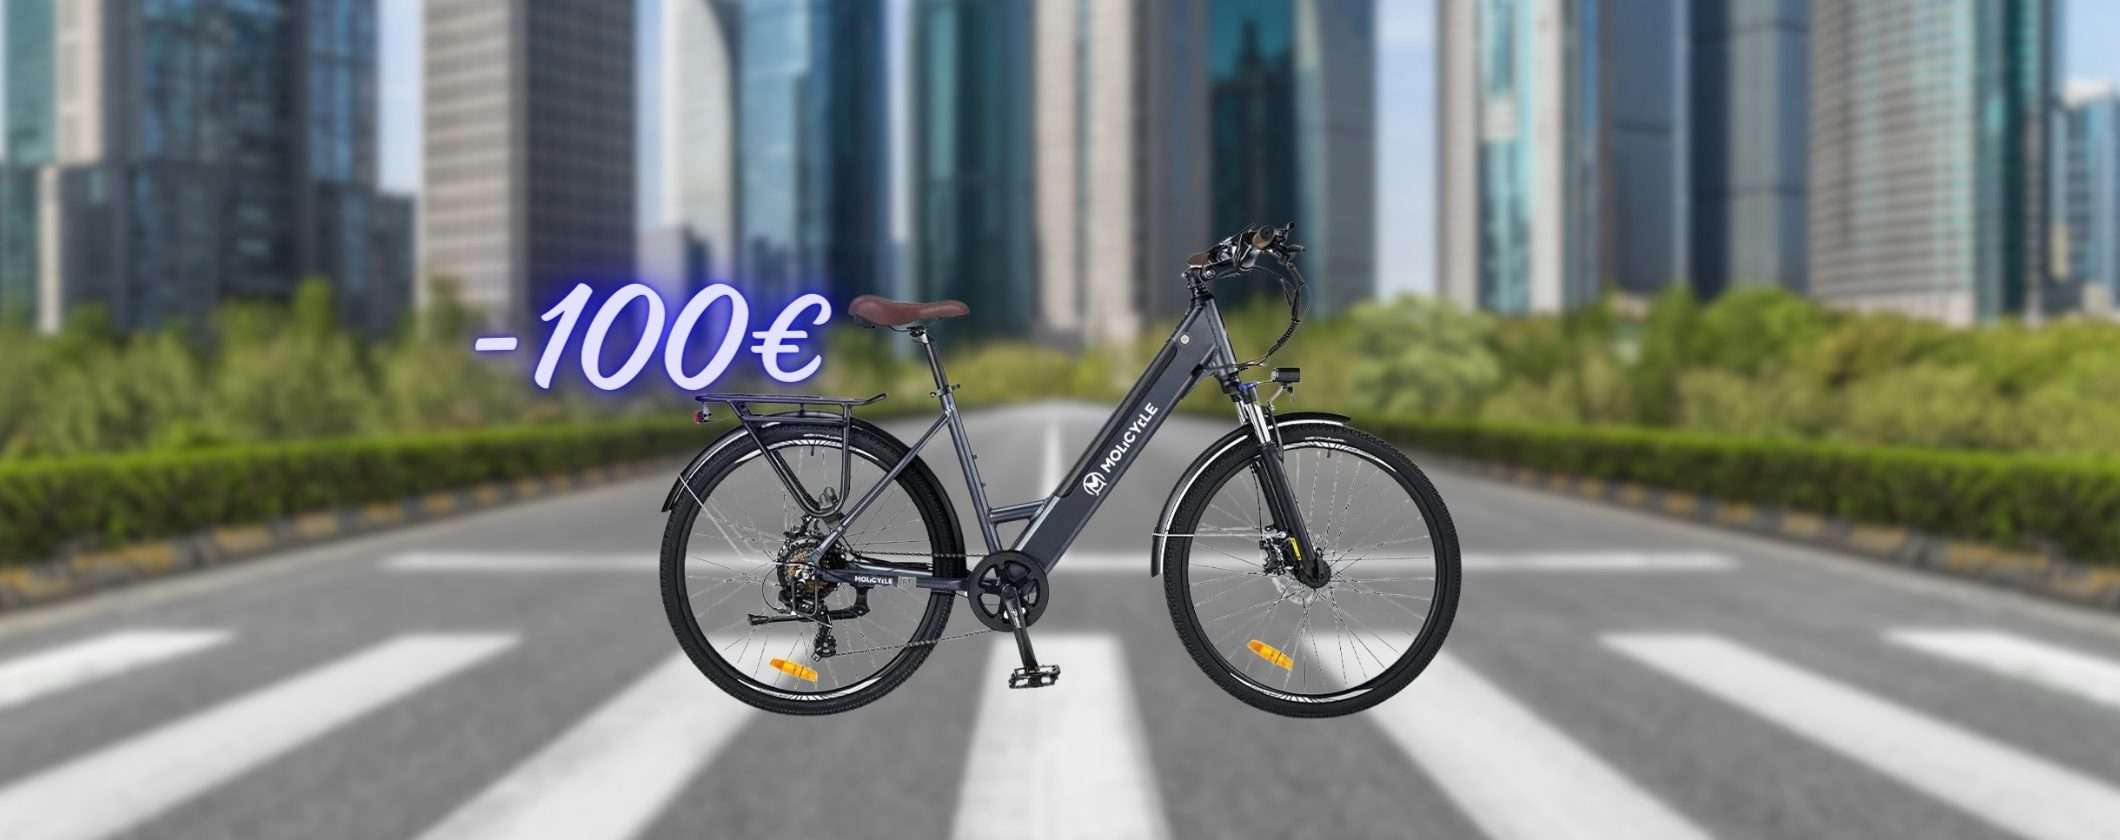 Bici Elettrica Trekking City BELLISSIMA: 100€ di sconto su BuyBestGear